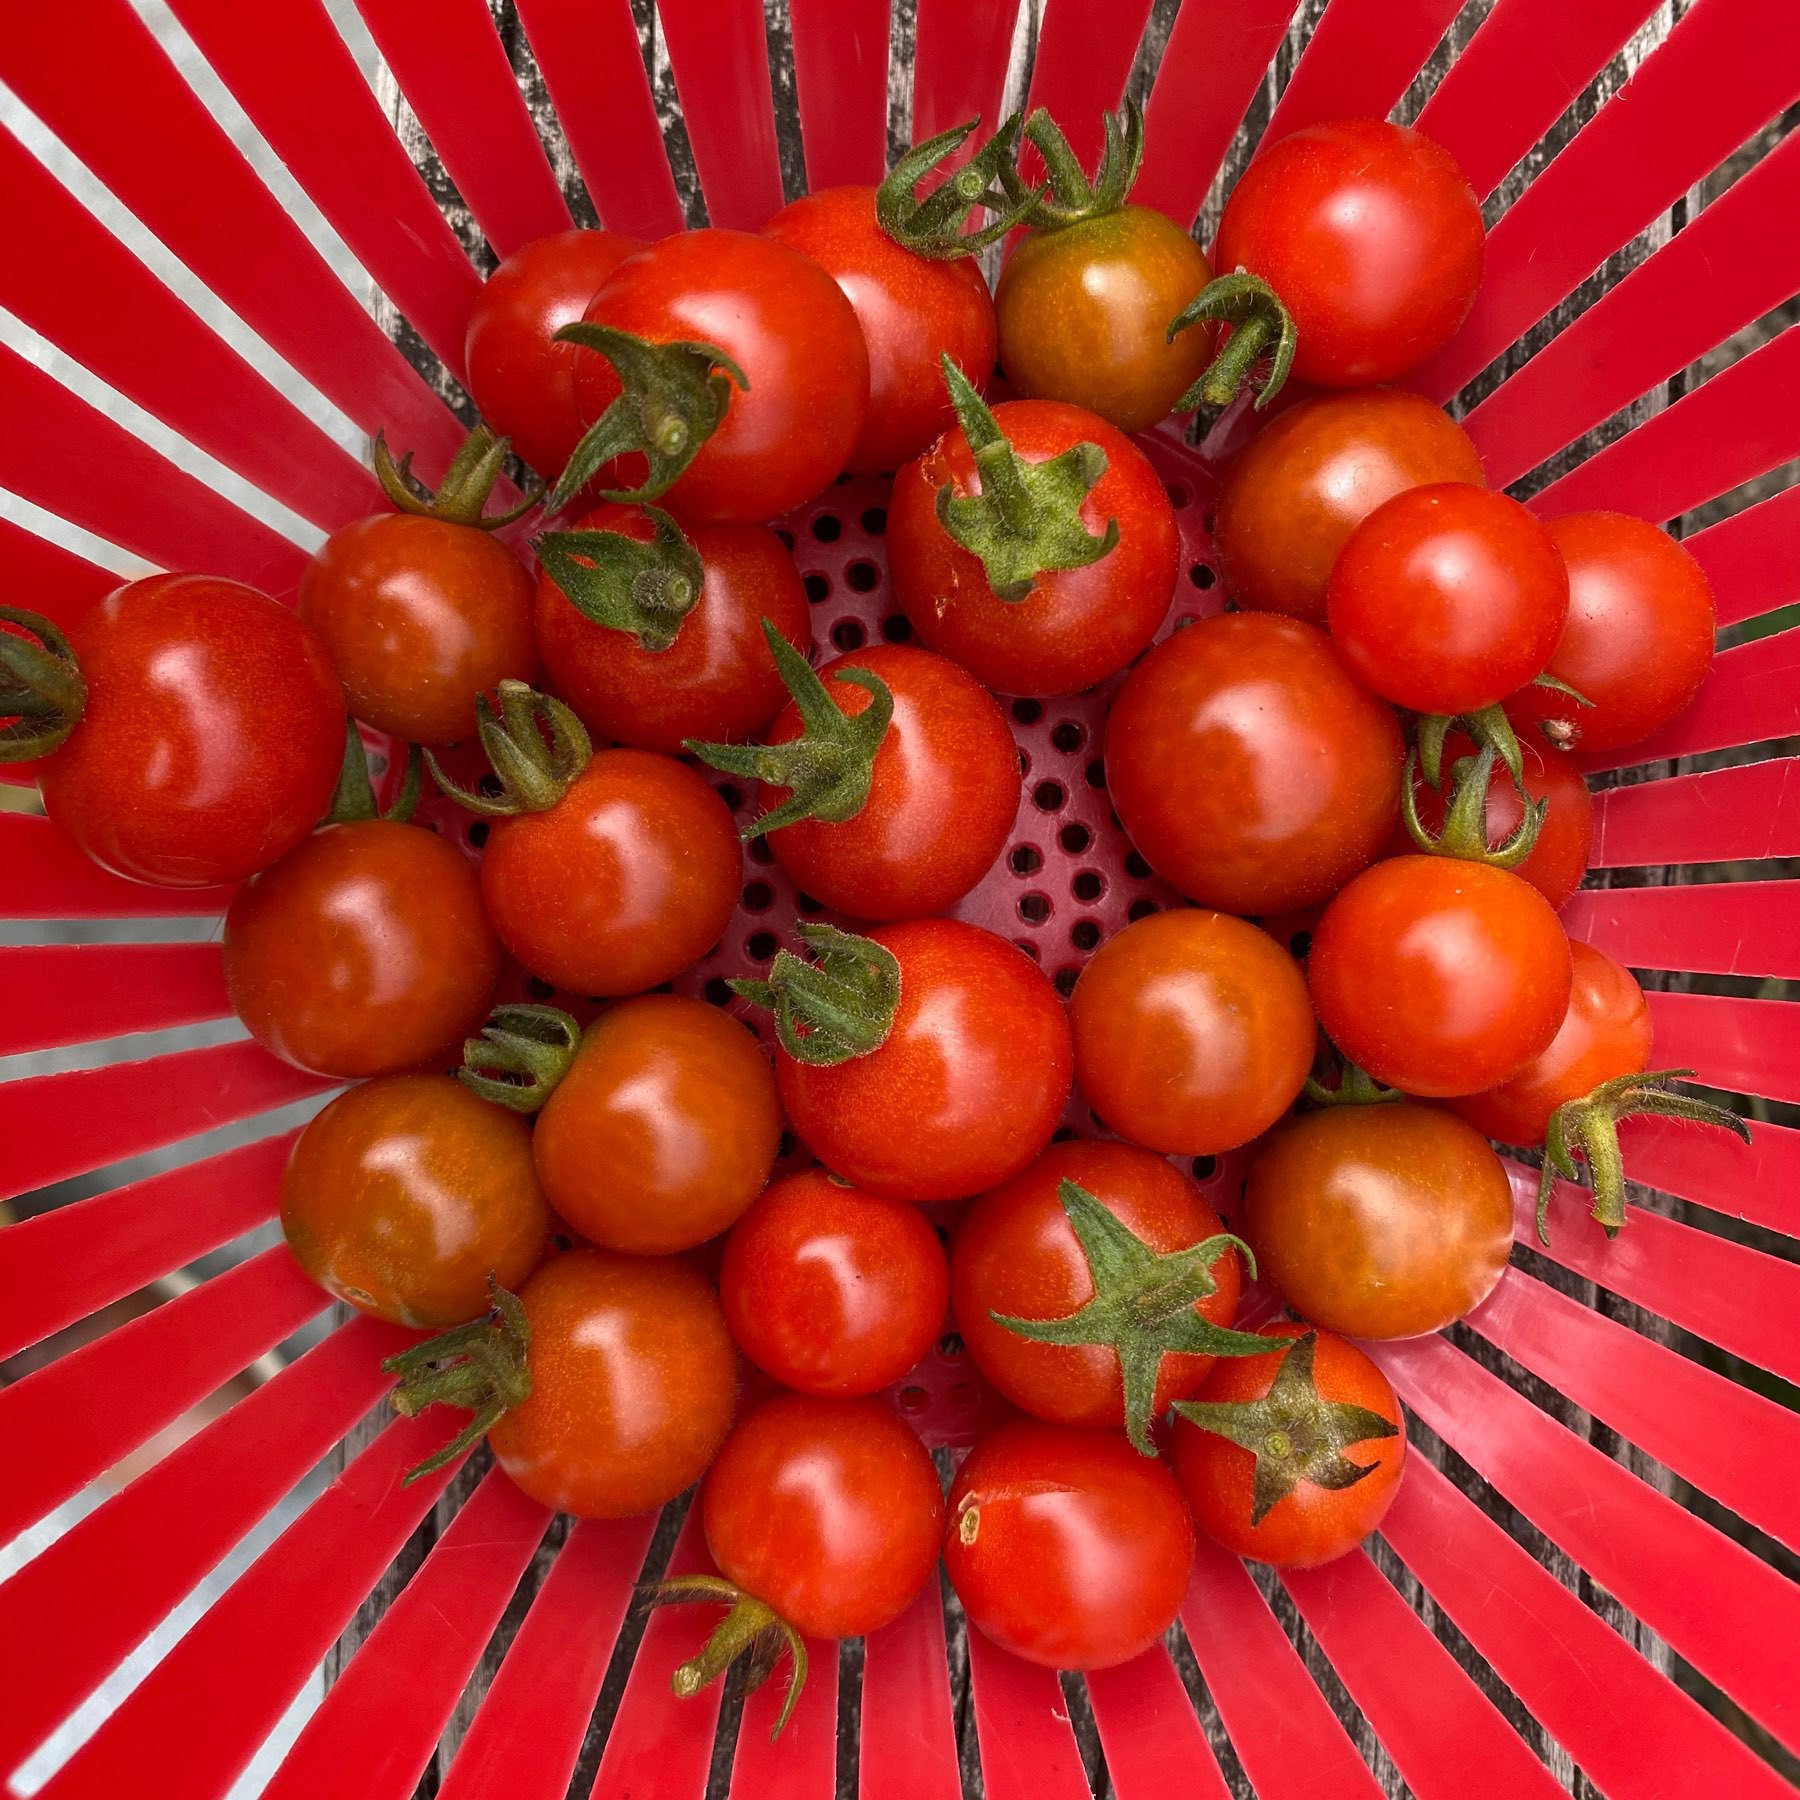 Thirty tomatoes